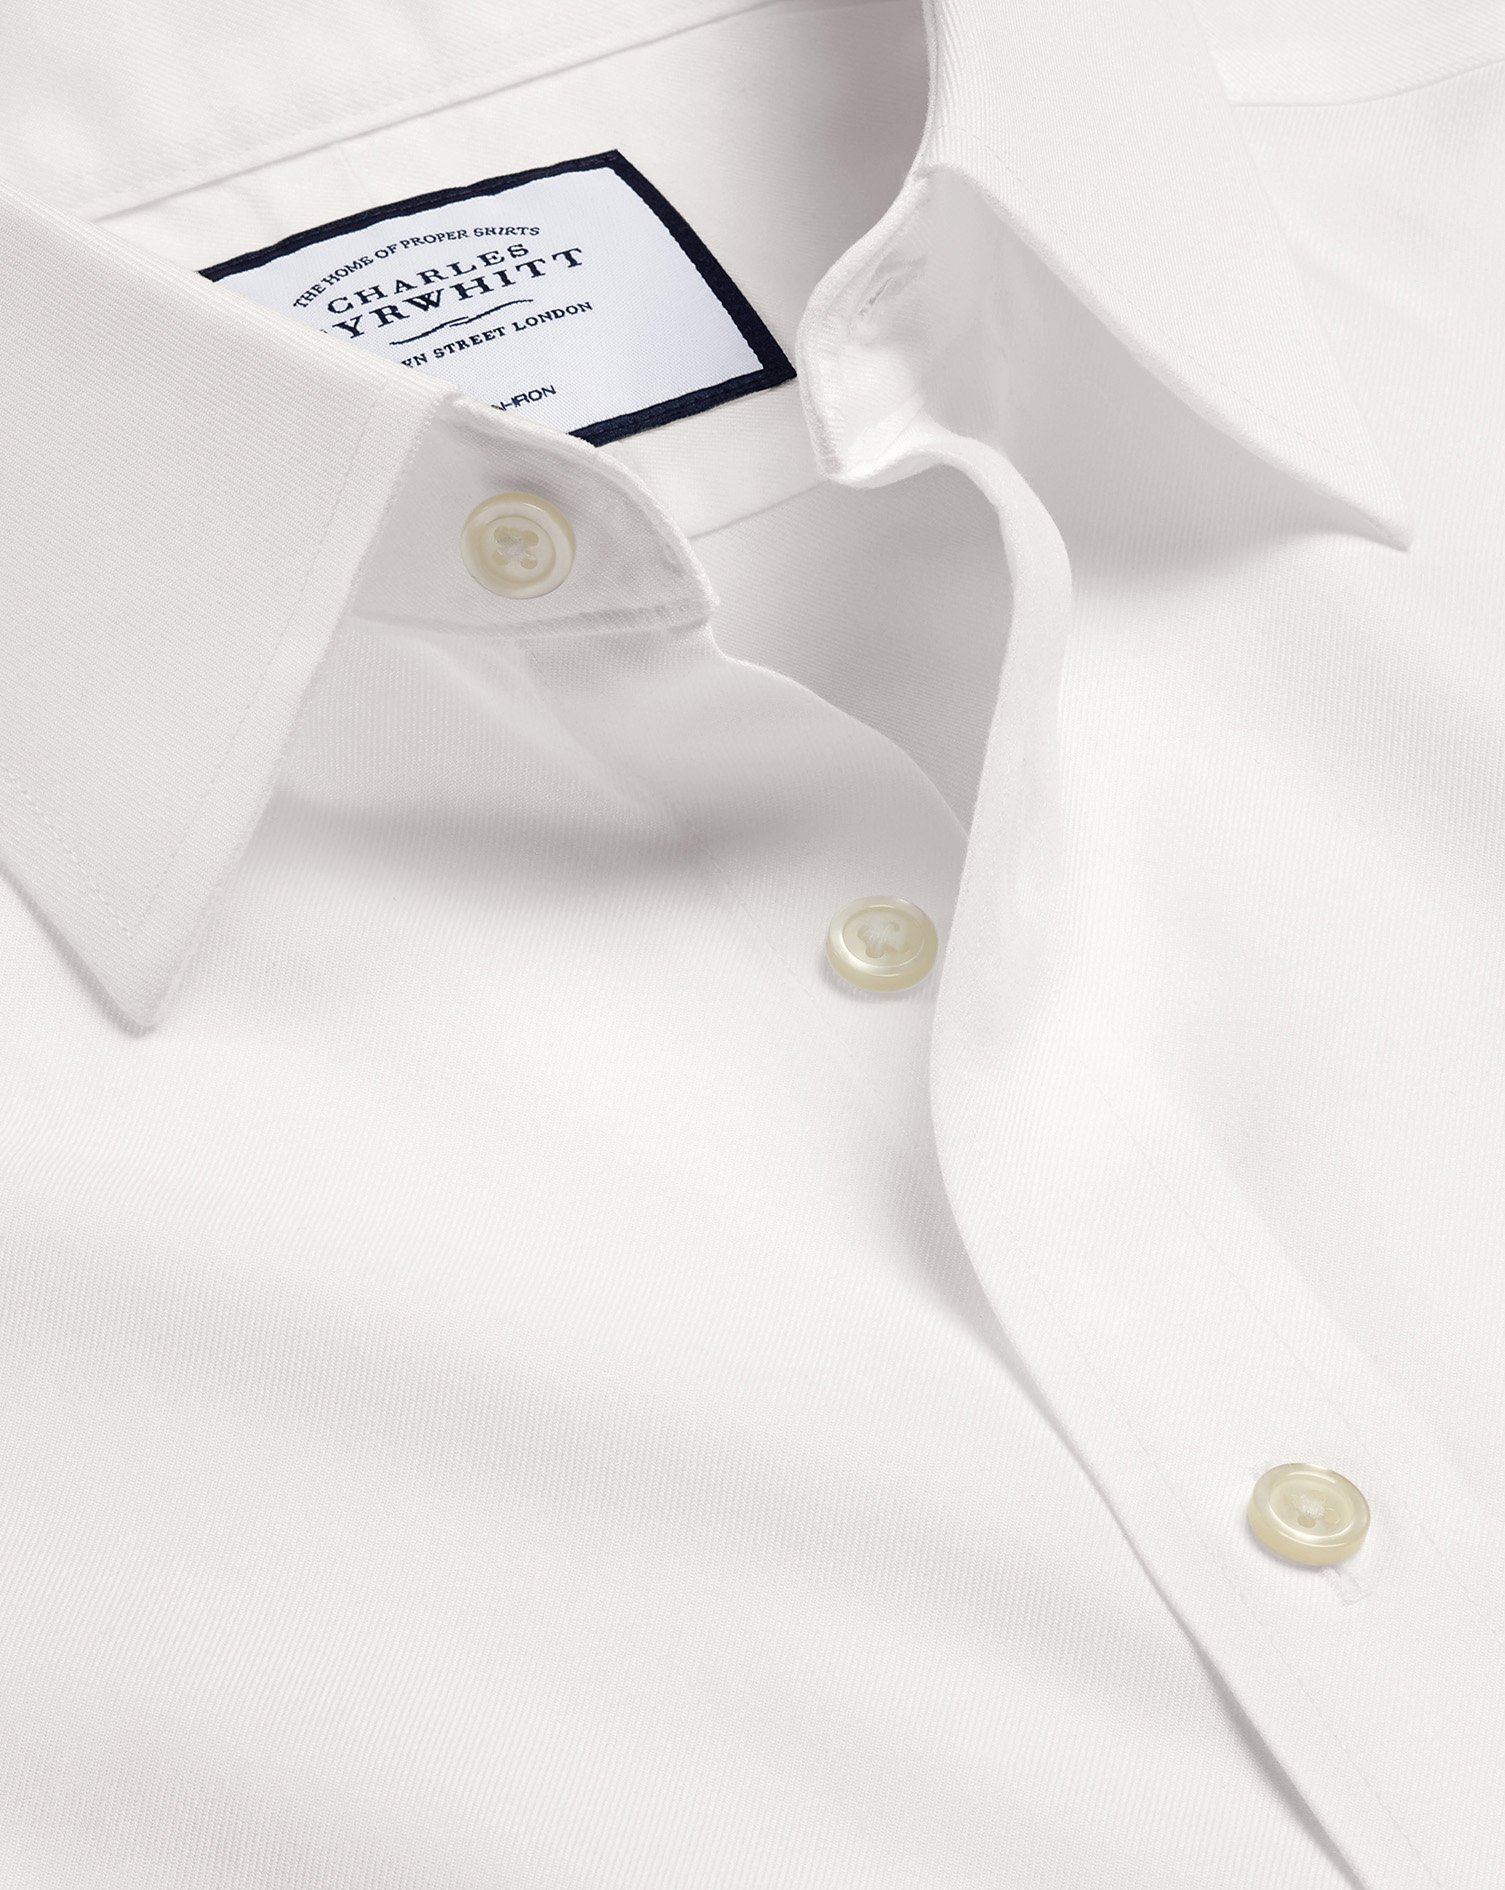 Men's Charles Tyrwhitt Non-Iron Twill Dress Shirt - Ivory White Single Cuff Size Small Cotton
